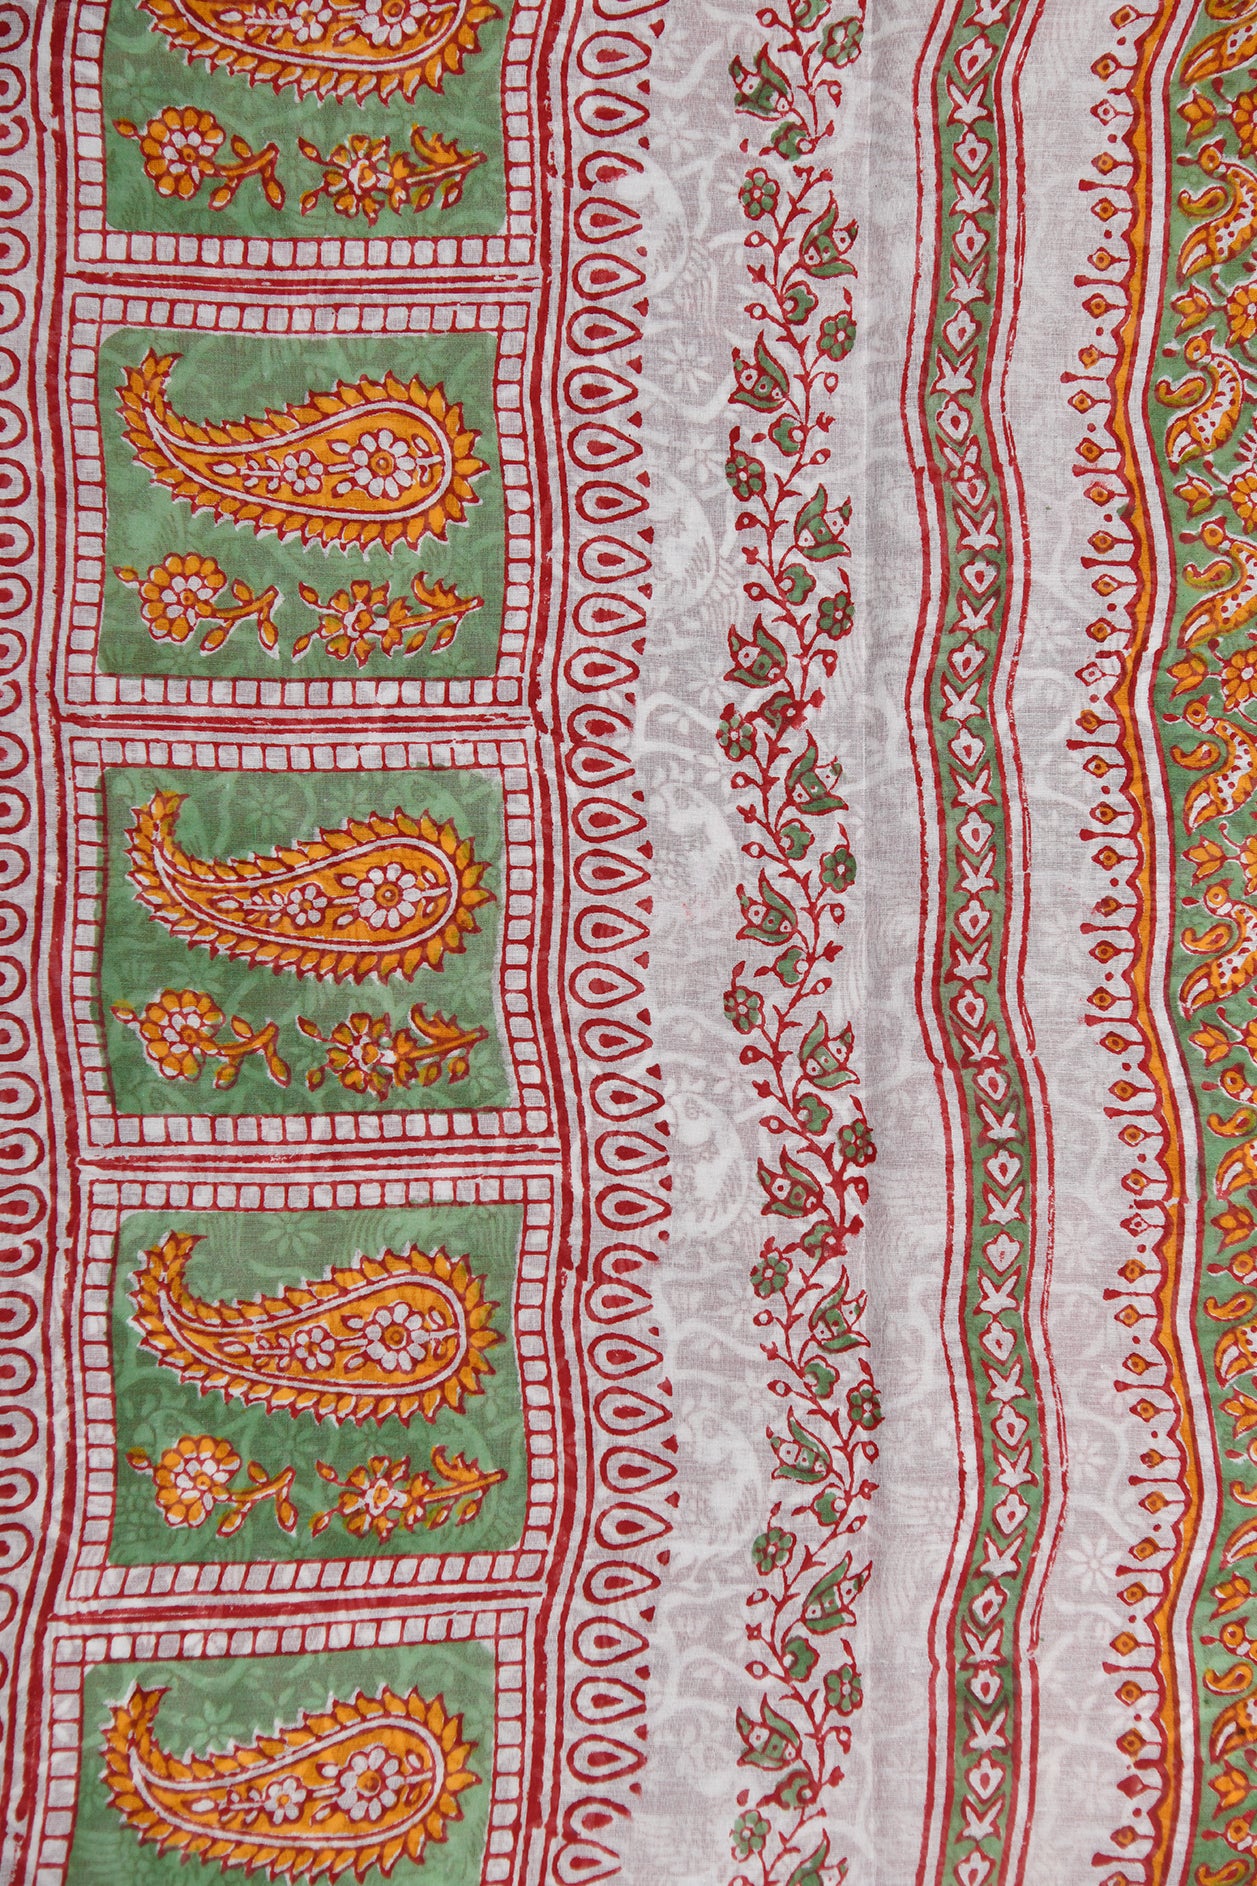 Parrot Motif Printed Maroon Hyderabad Cotton Saree